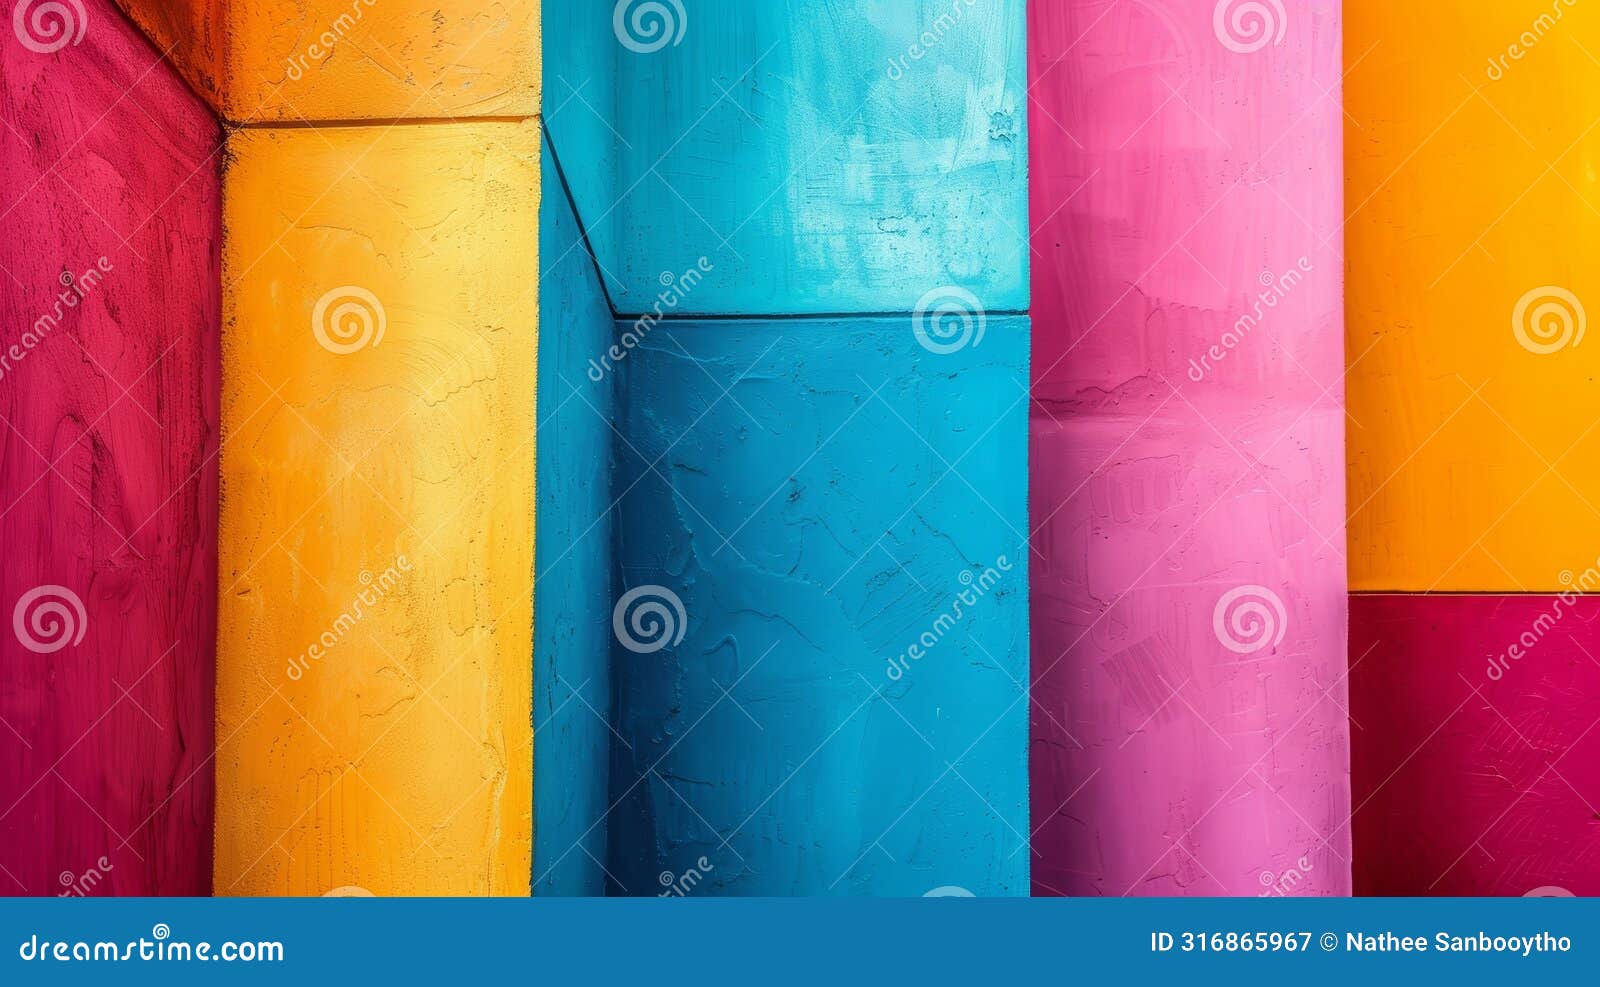 abstract colorful columns in vivid hues